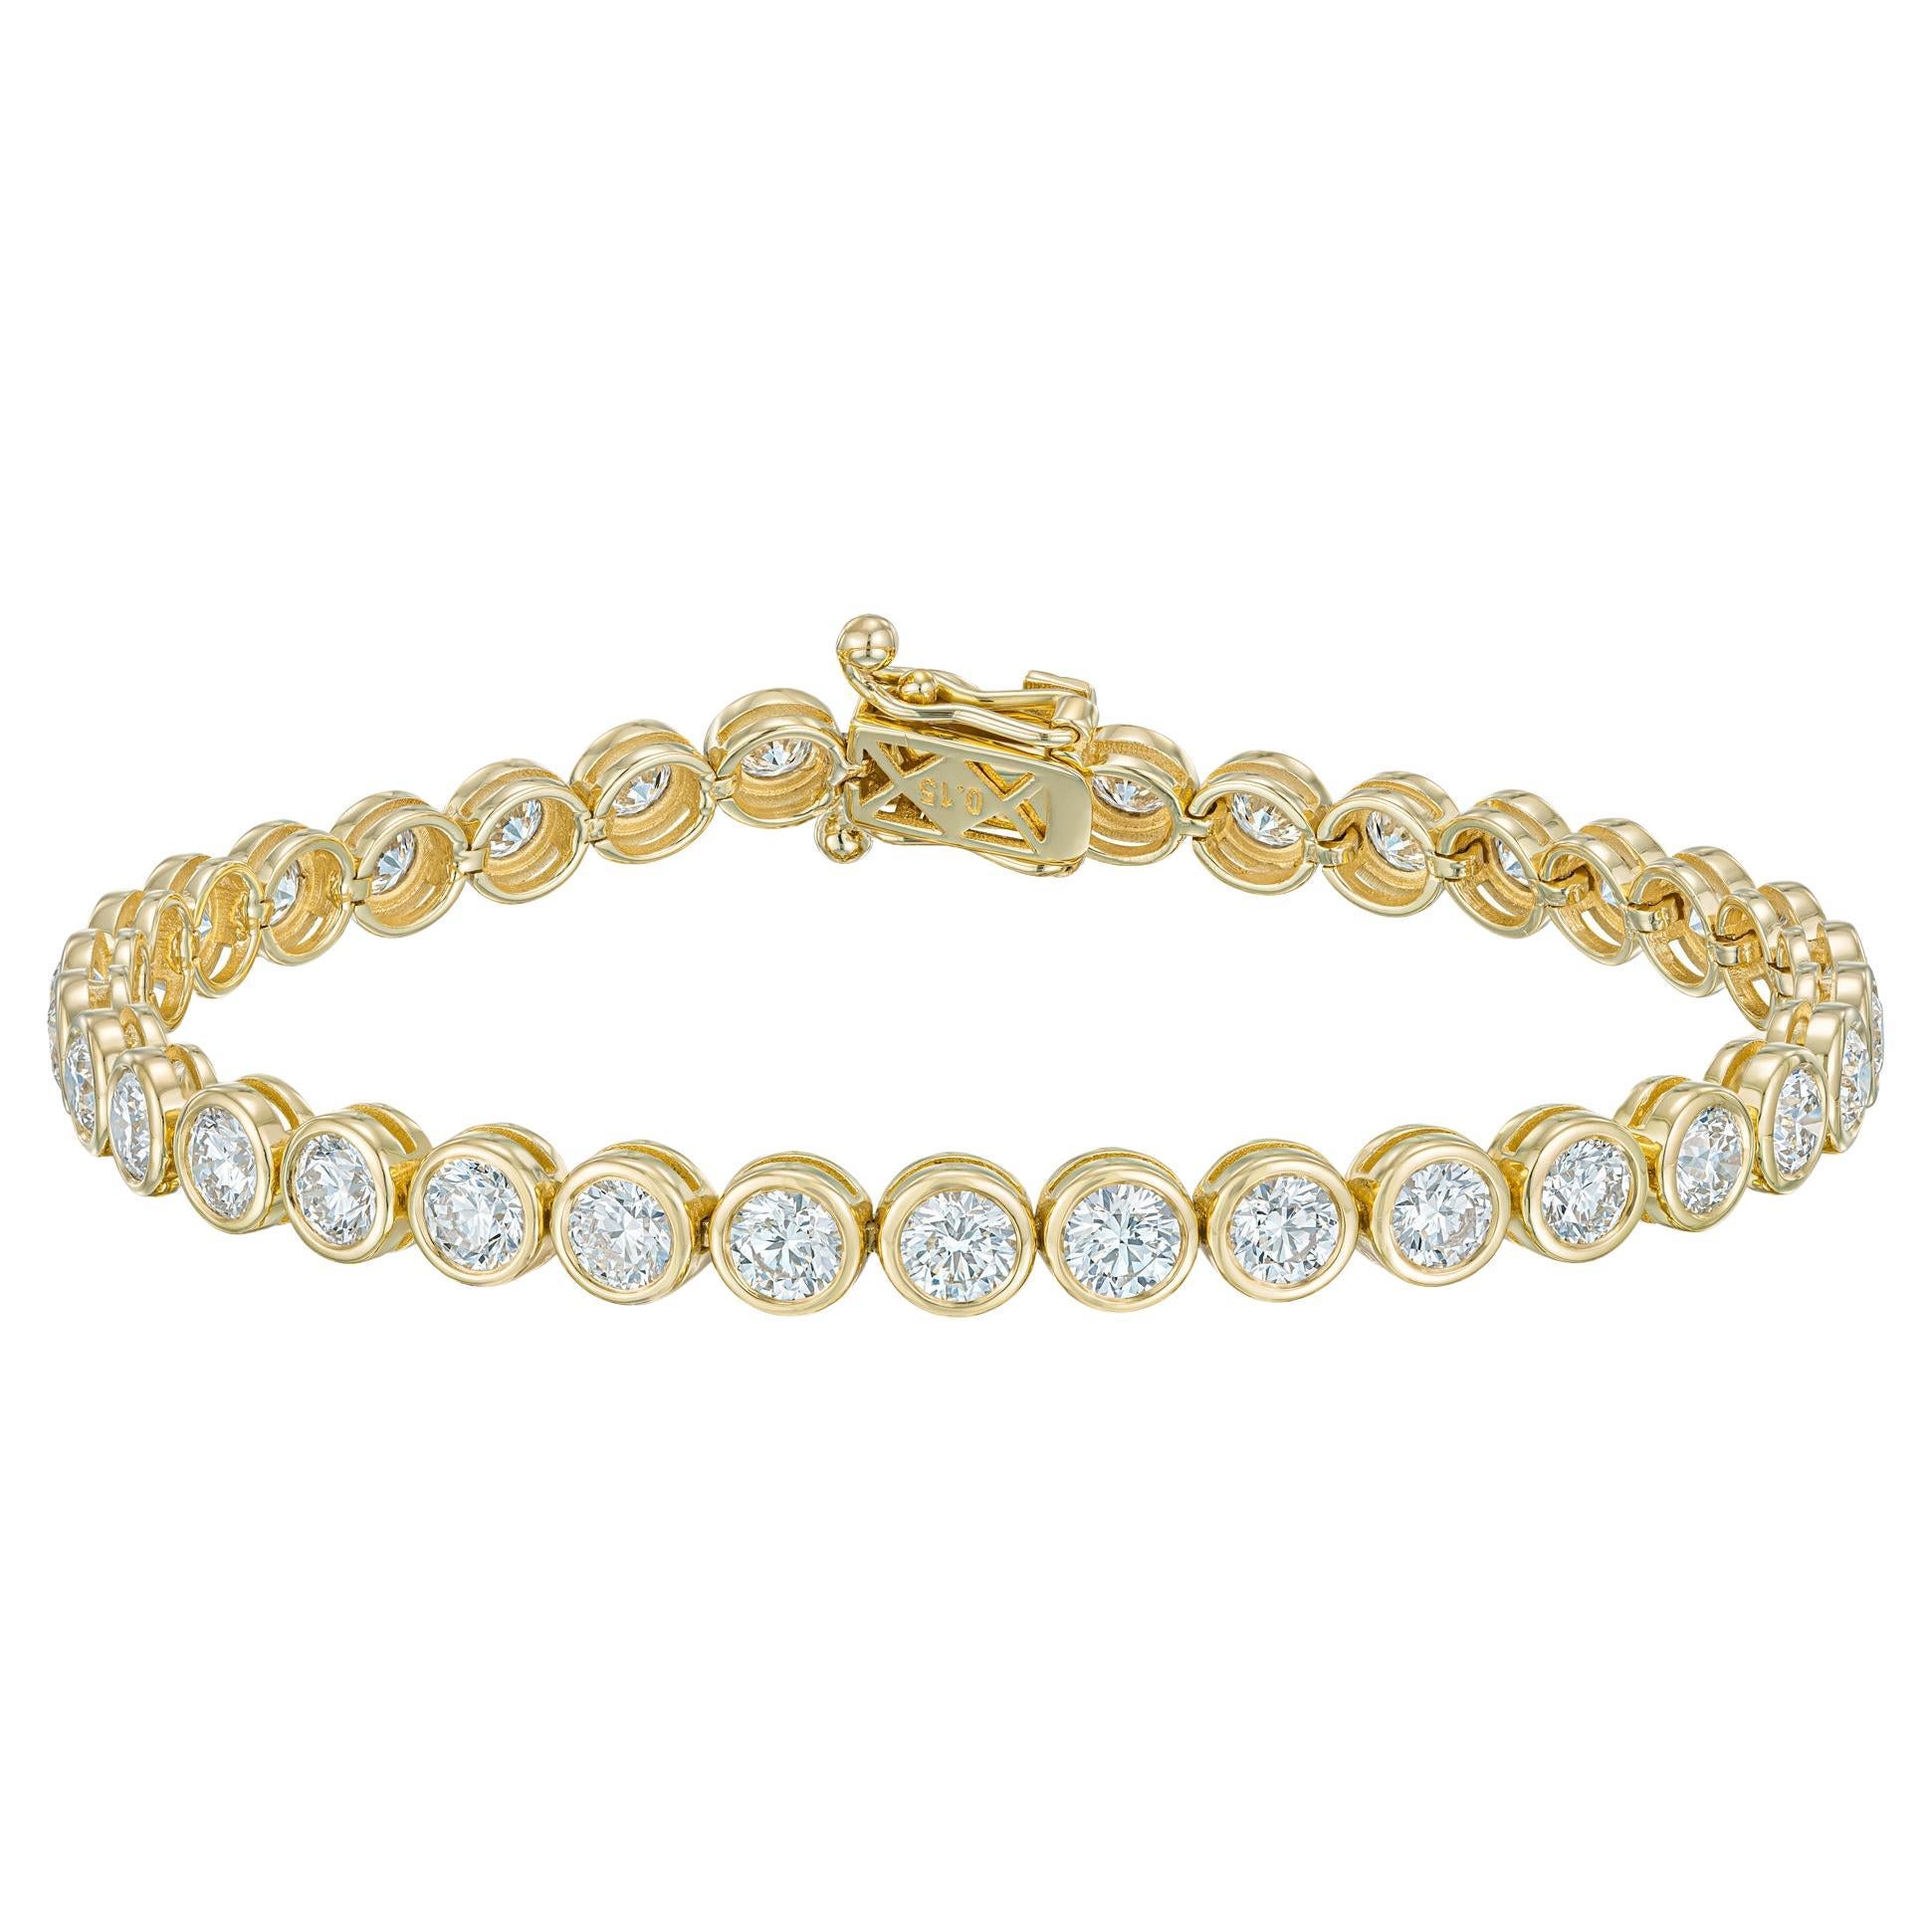 5.40 carat Bezel Set Natural Diamond Tennis Bracelet in 18K Yellow Gold 